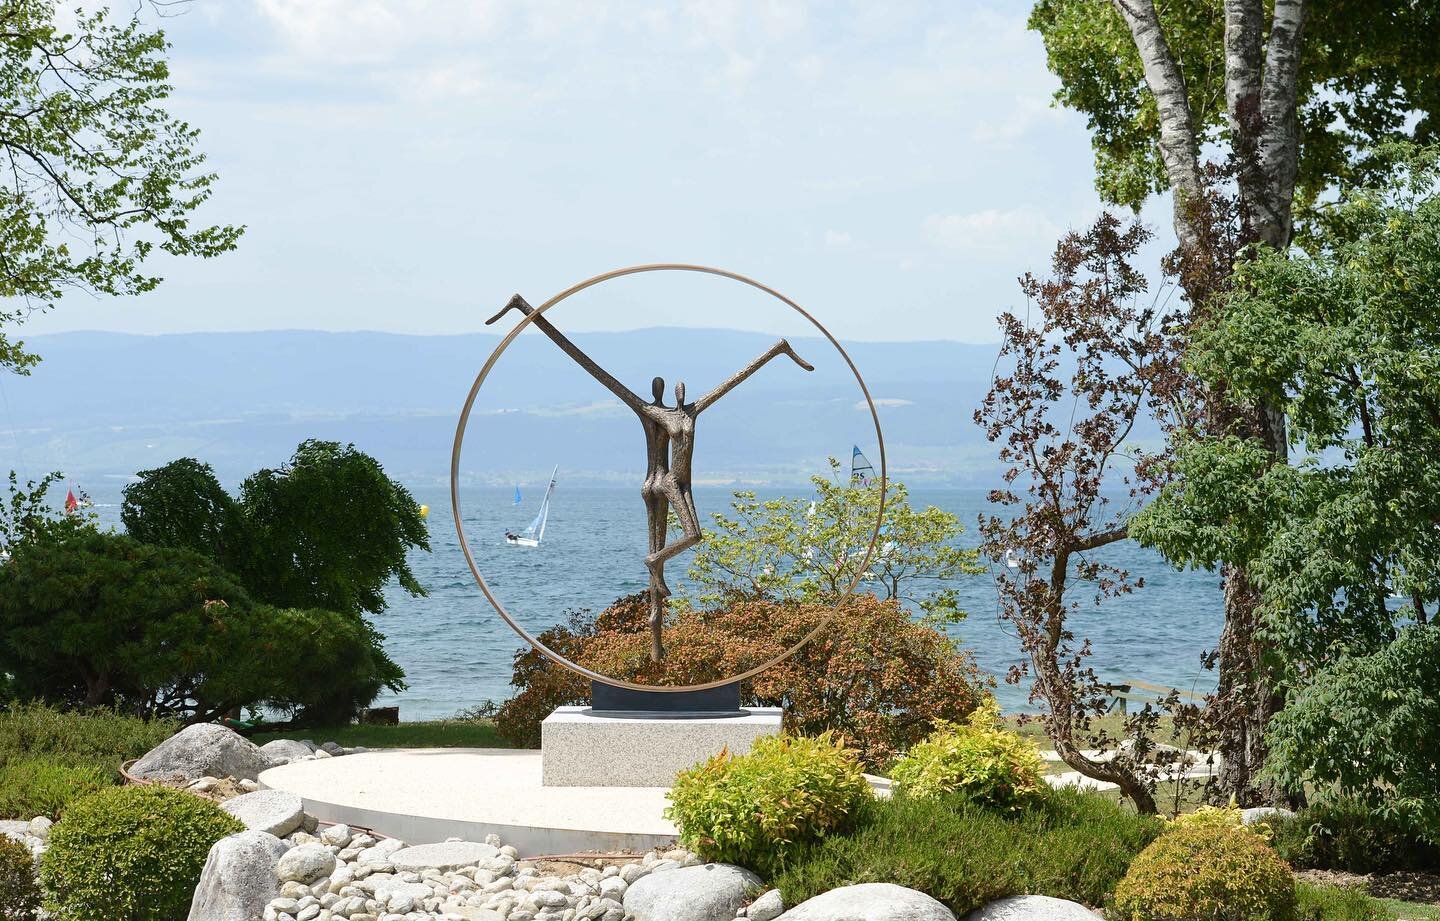 Harmony in this special spot on the edge of Lake Geneva 
#bronzesculpture #sculpture #gardensculpture #commission #sculptor #michaelspeller #clarendonfineart #figurativesculpture #britishsculpture